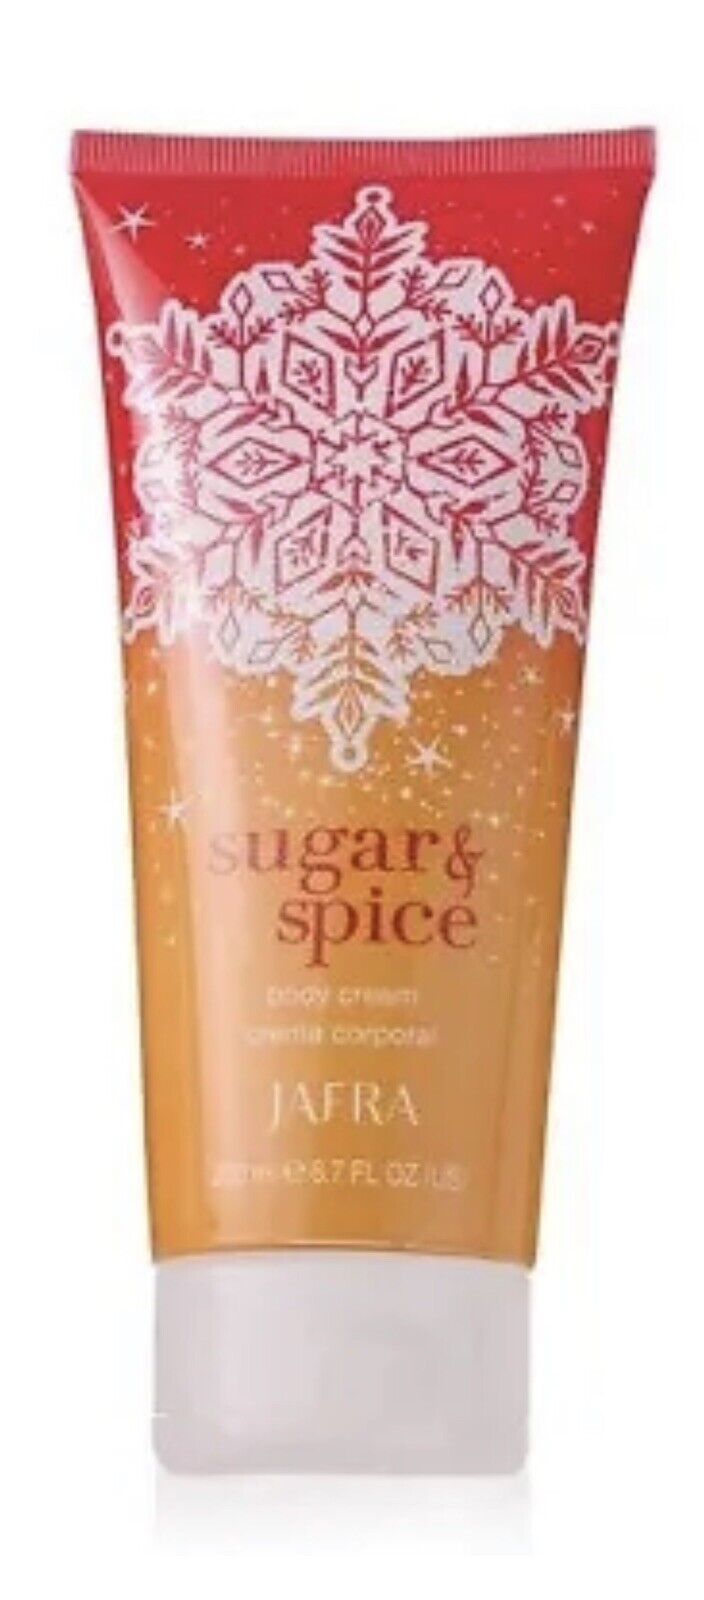 JAFRA Sugar & Spice Body Cream 200ml - $14.99